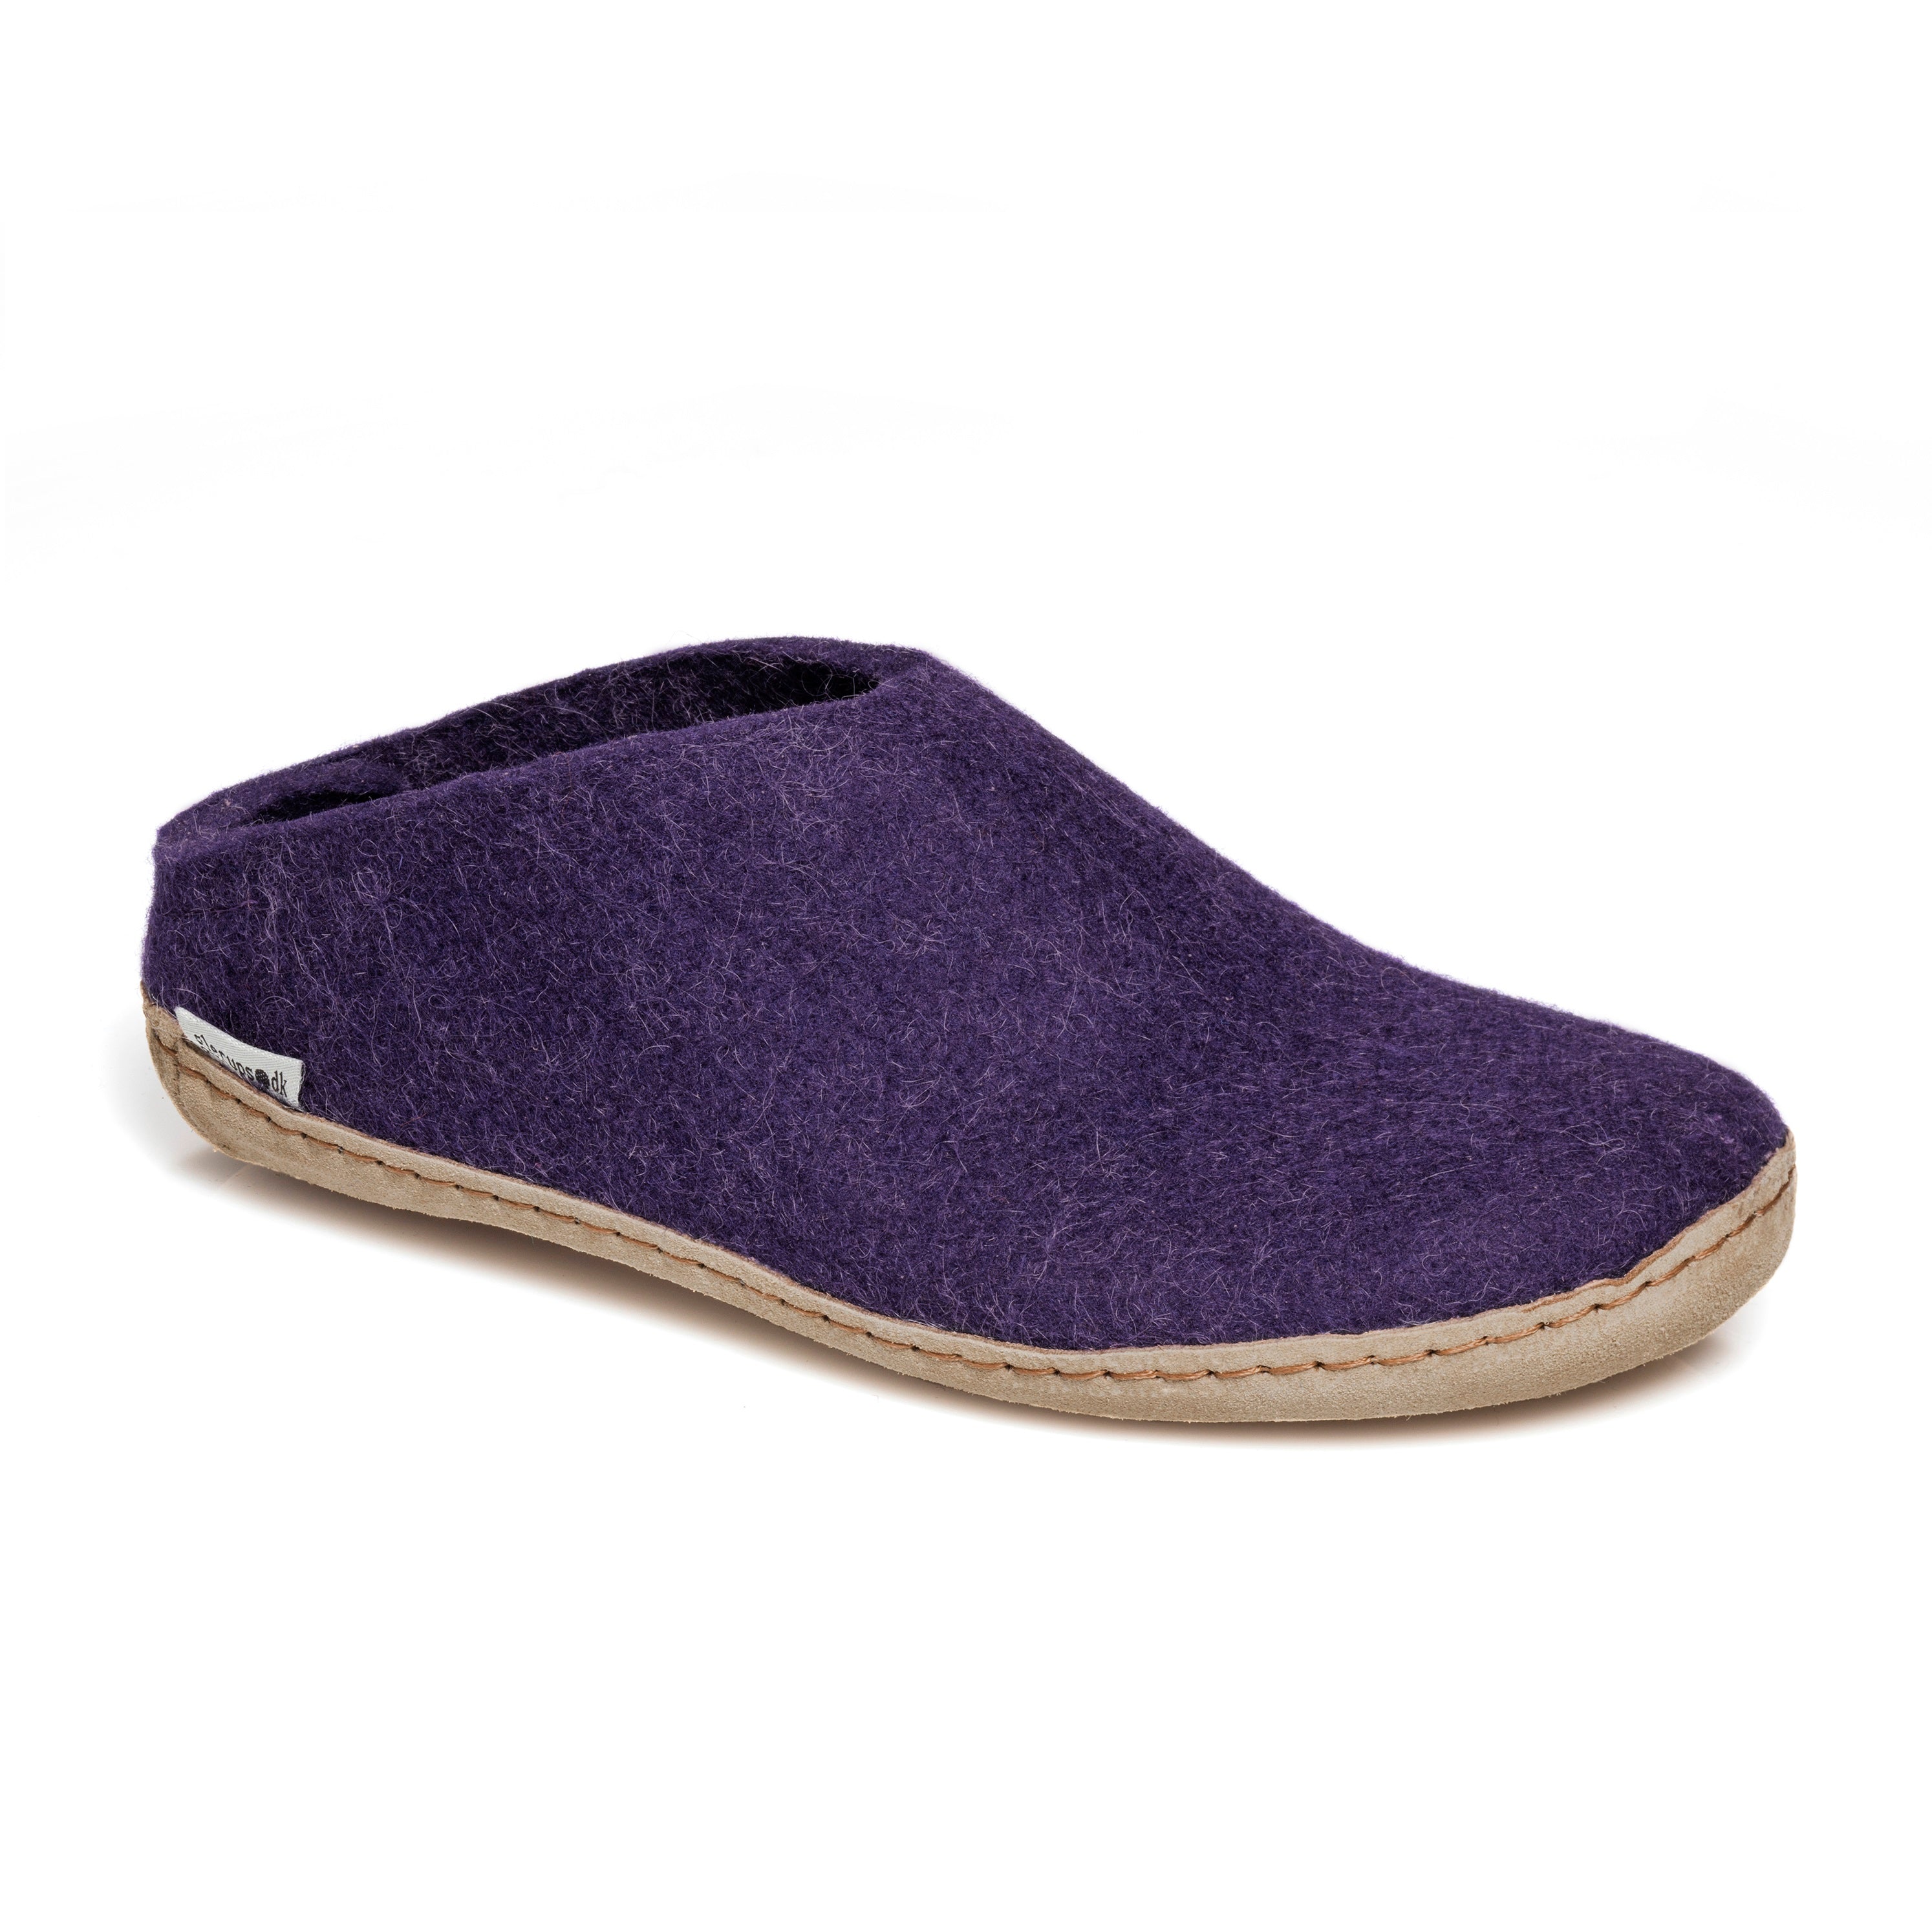 Glerups slipper slip-on leather sole purple